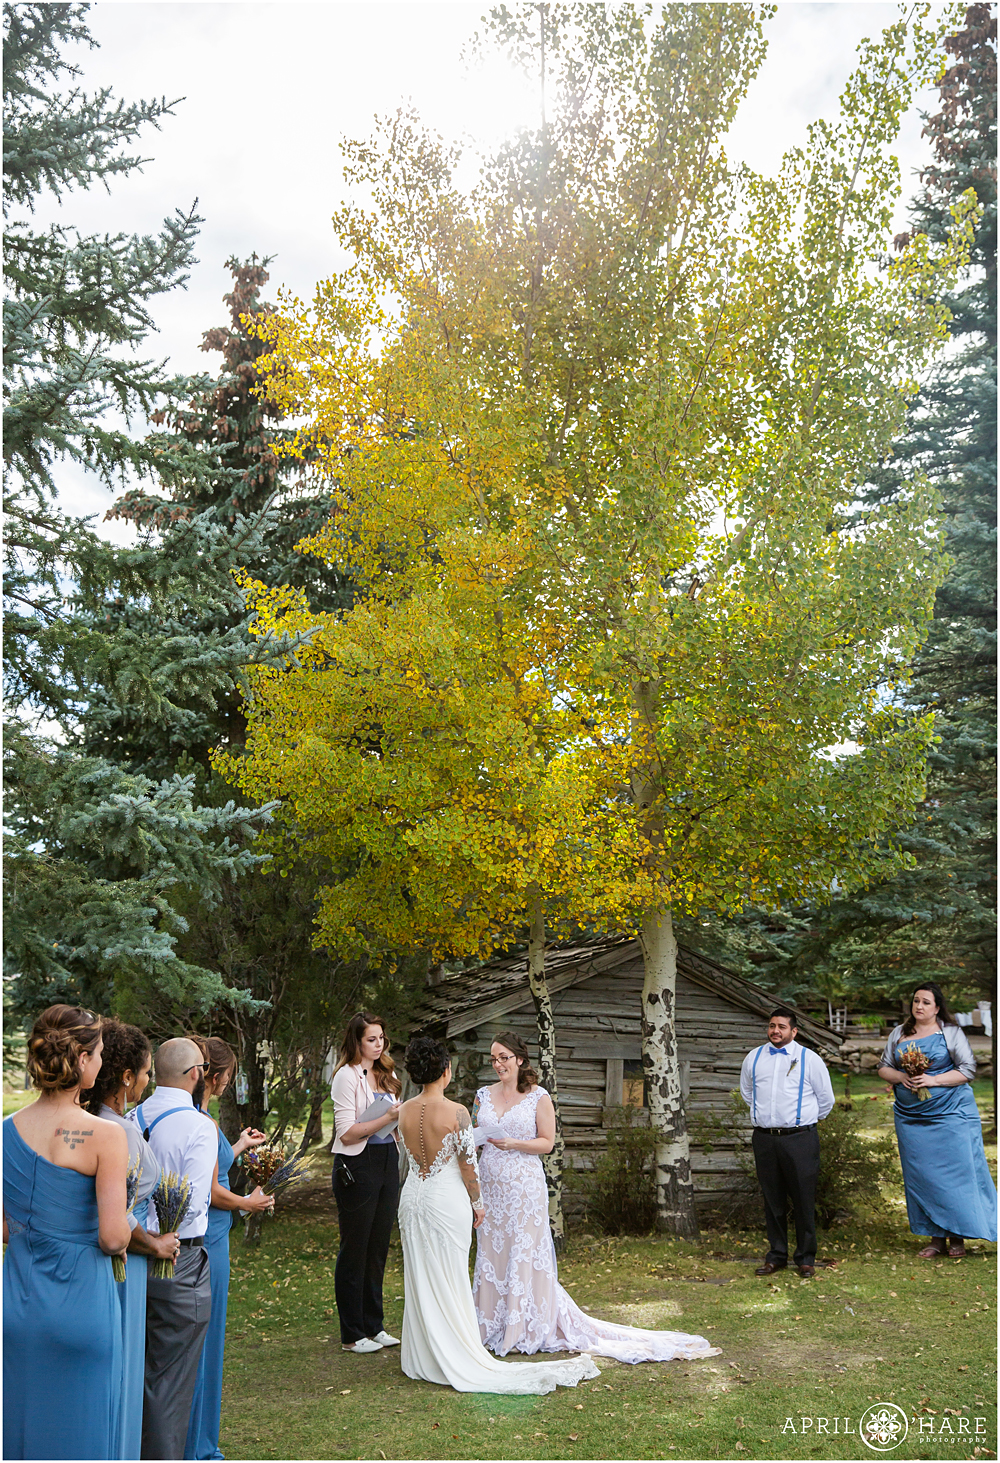 Beautiful fall color wedding photo at The Barn at Evergreen Memorial Park